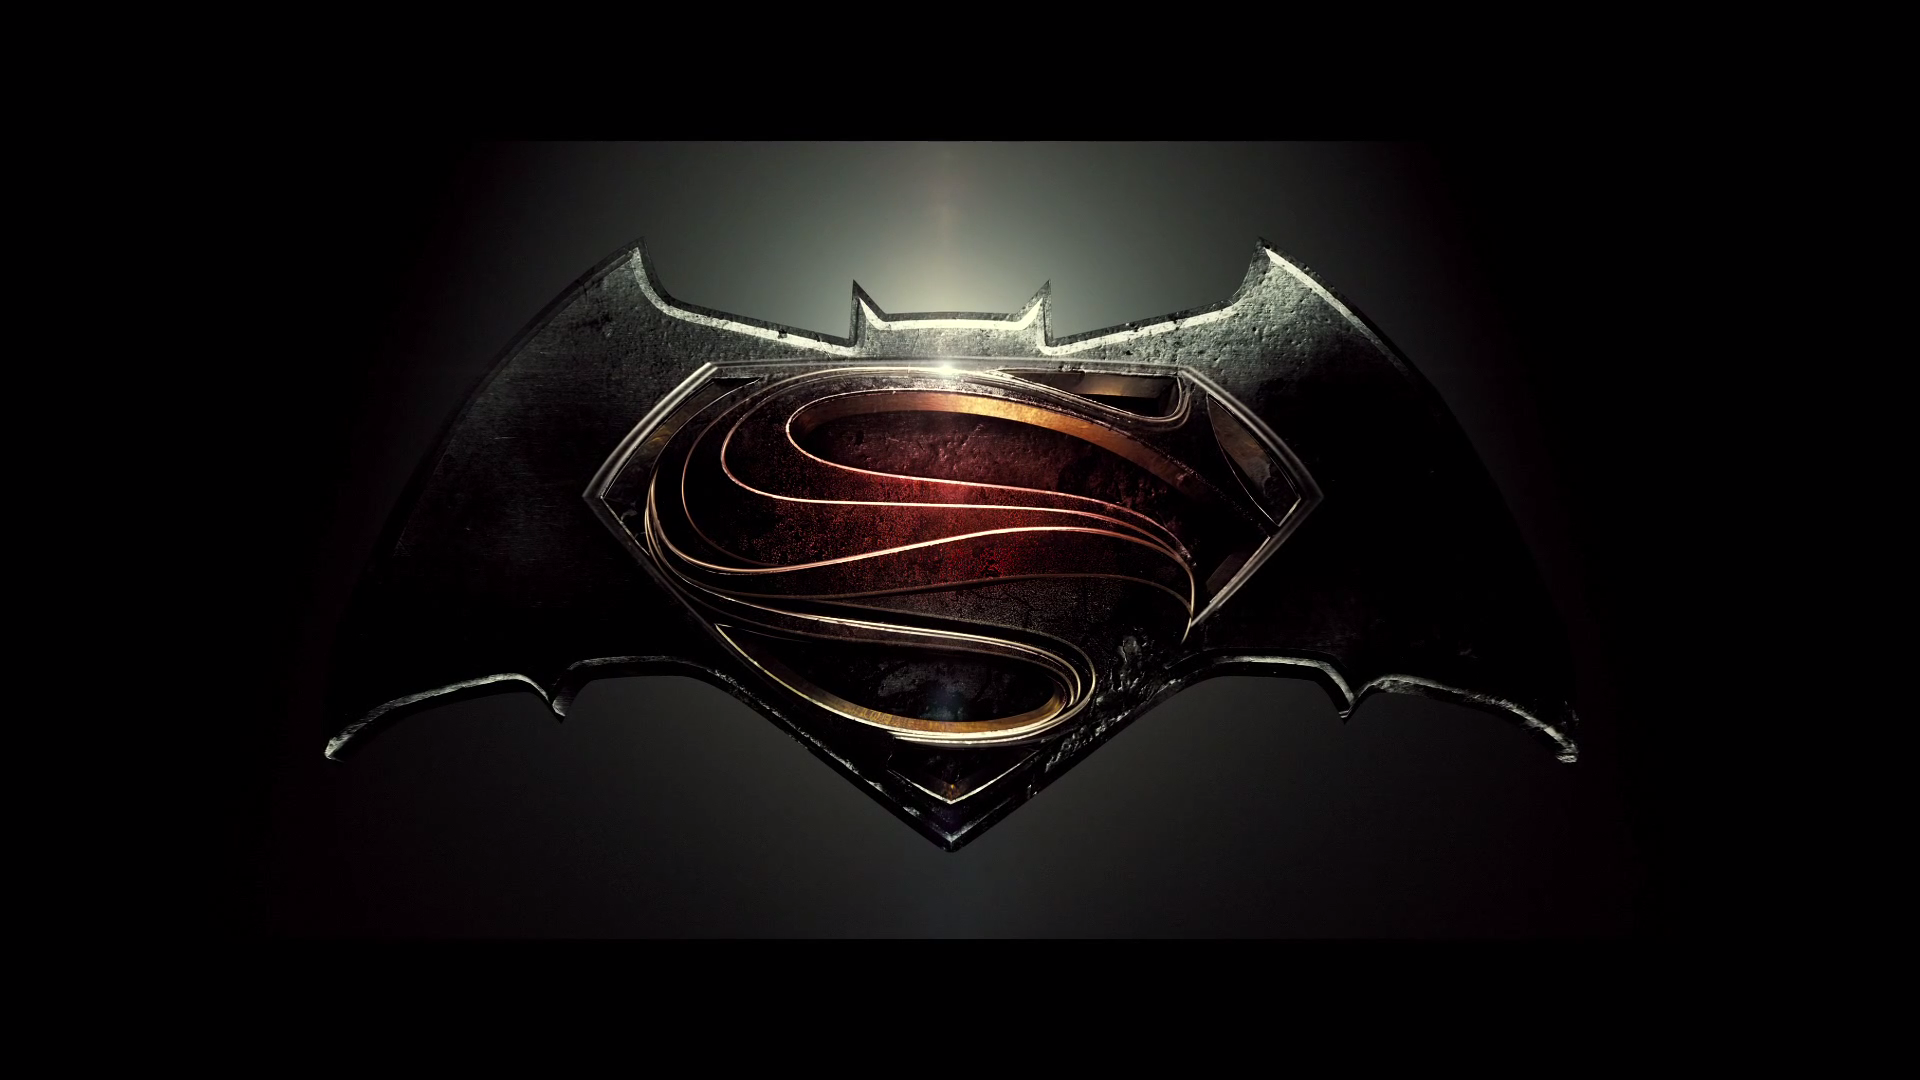 Batman vs Superman Logo Wallpaper   HD Wallpapers Backgrounds of Your